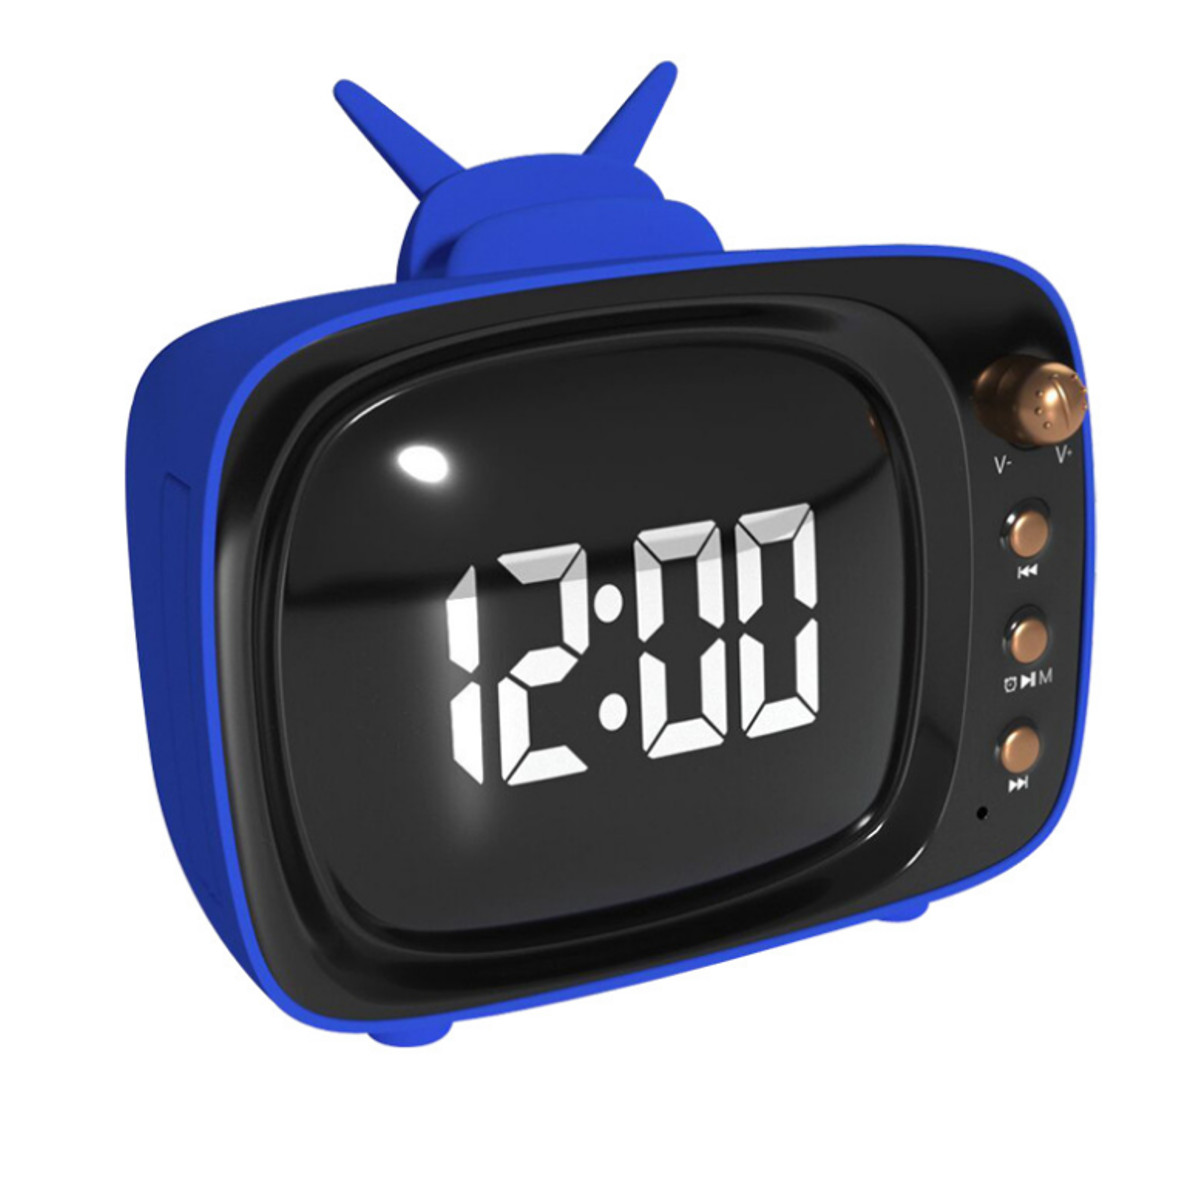 Portable Retro Speaker TV Design Mobile Phone Holder Stand Bluetooth Alarm Clock